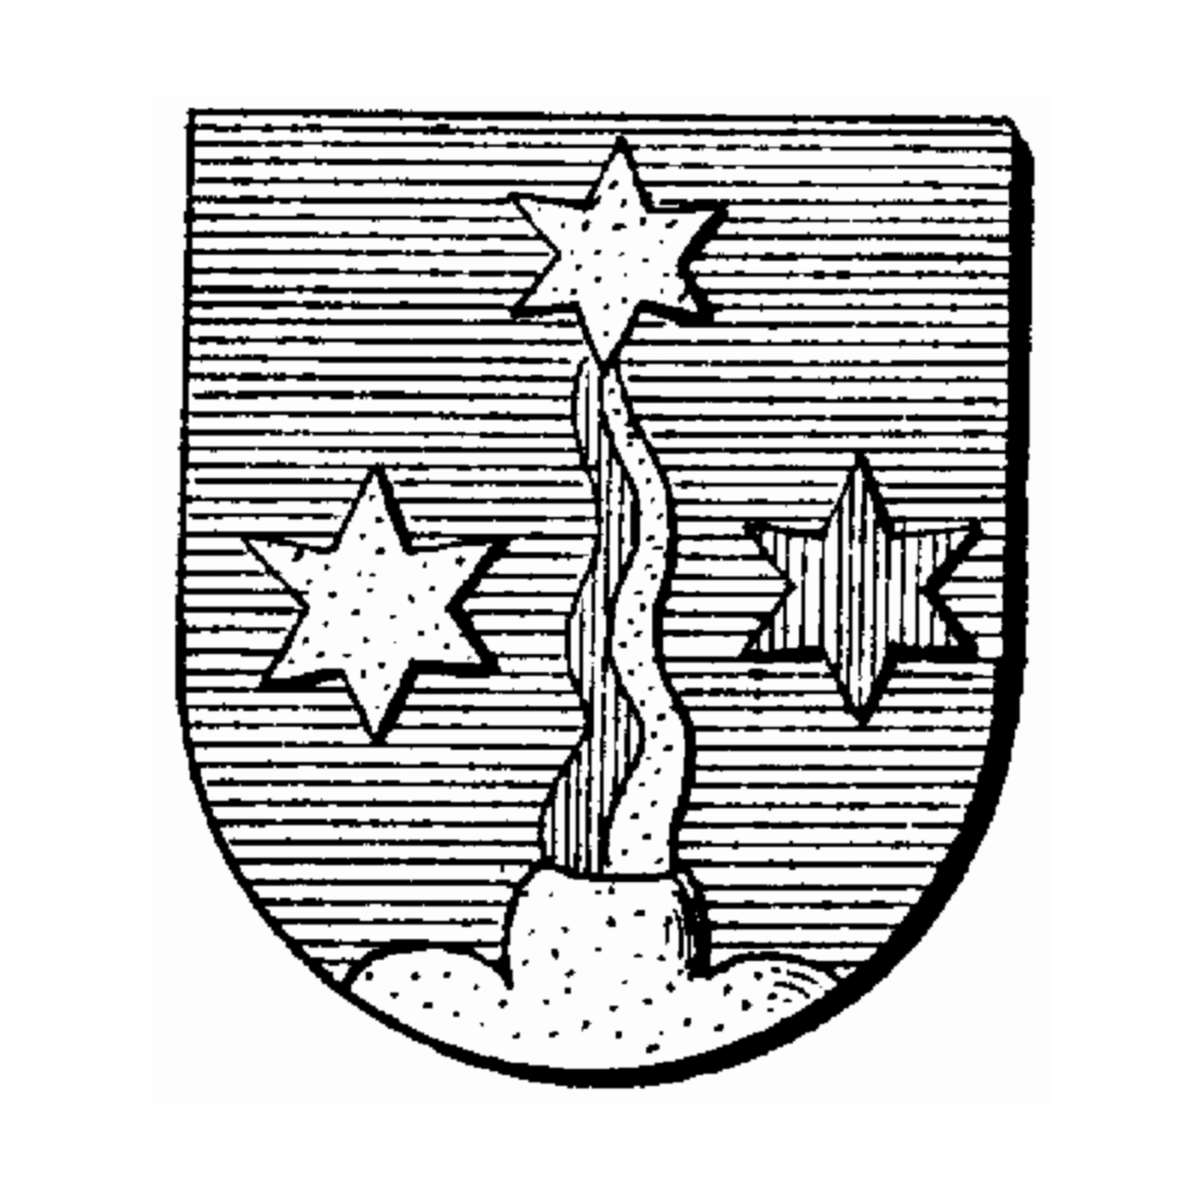 Coat of arms of family Göhl